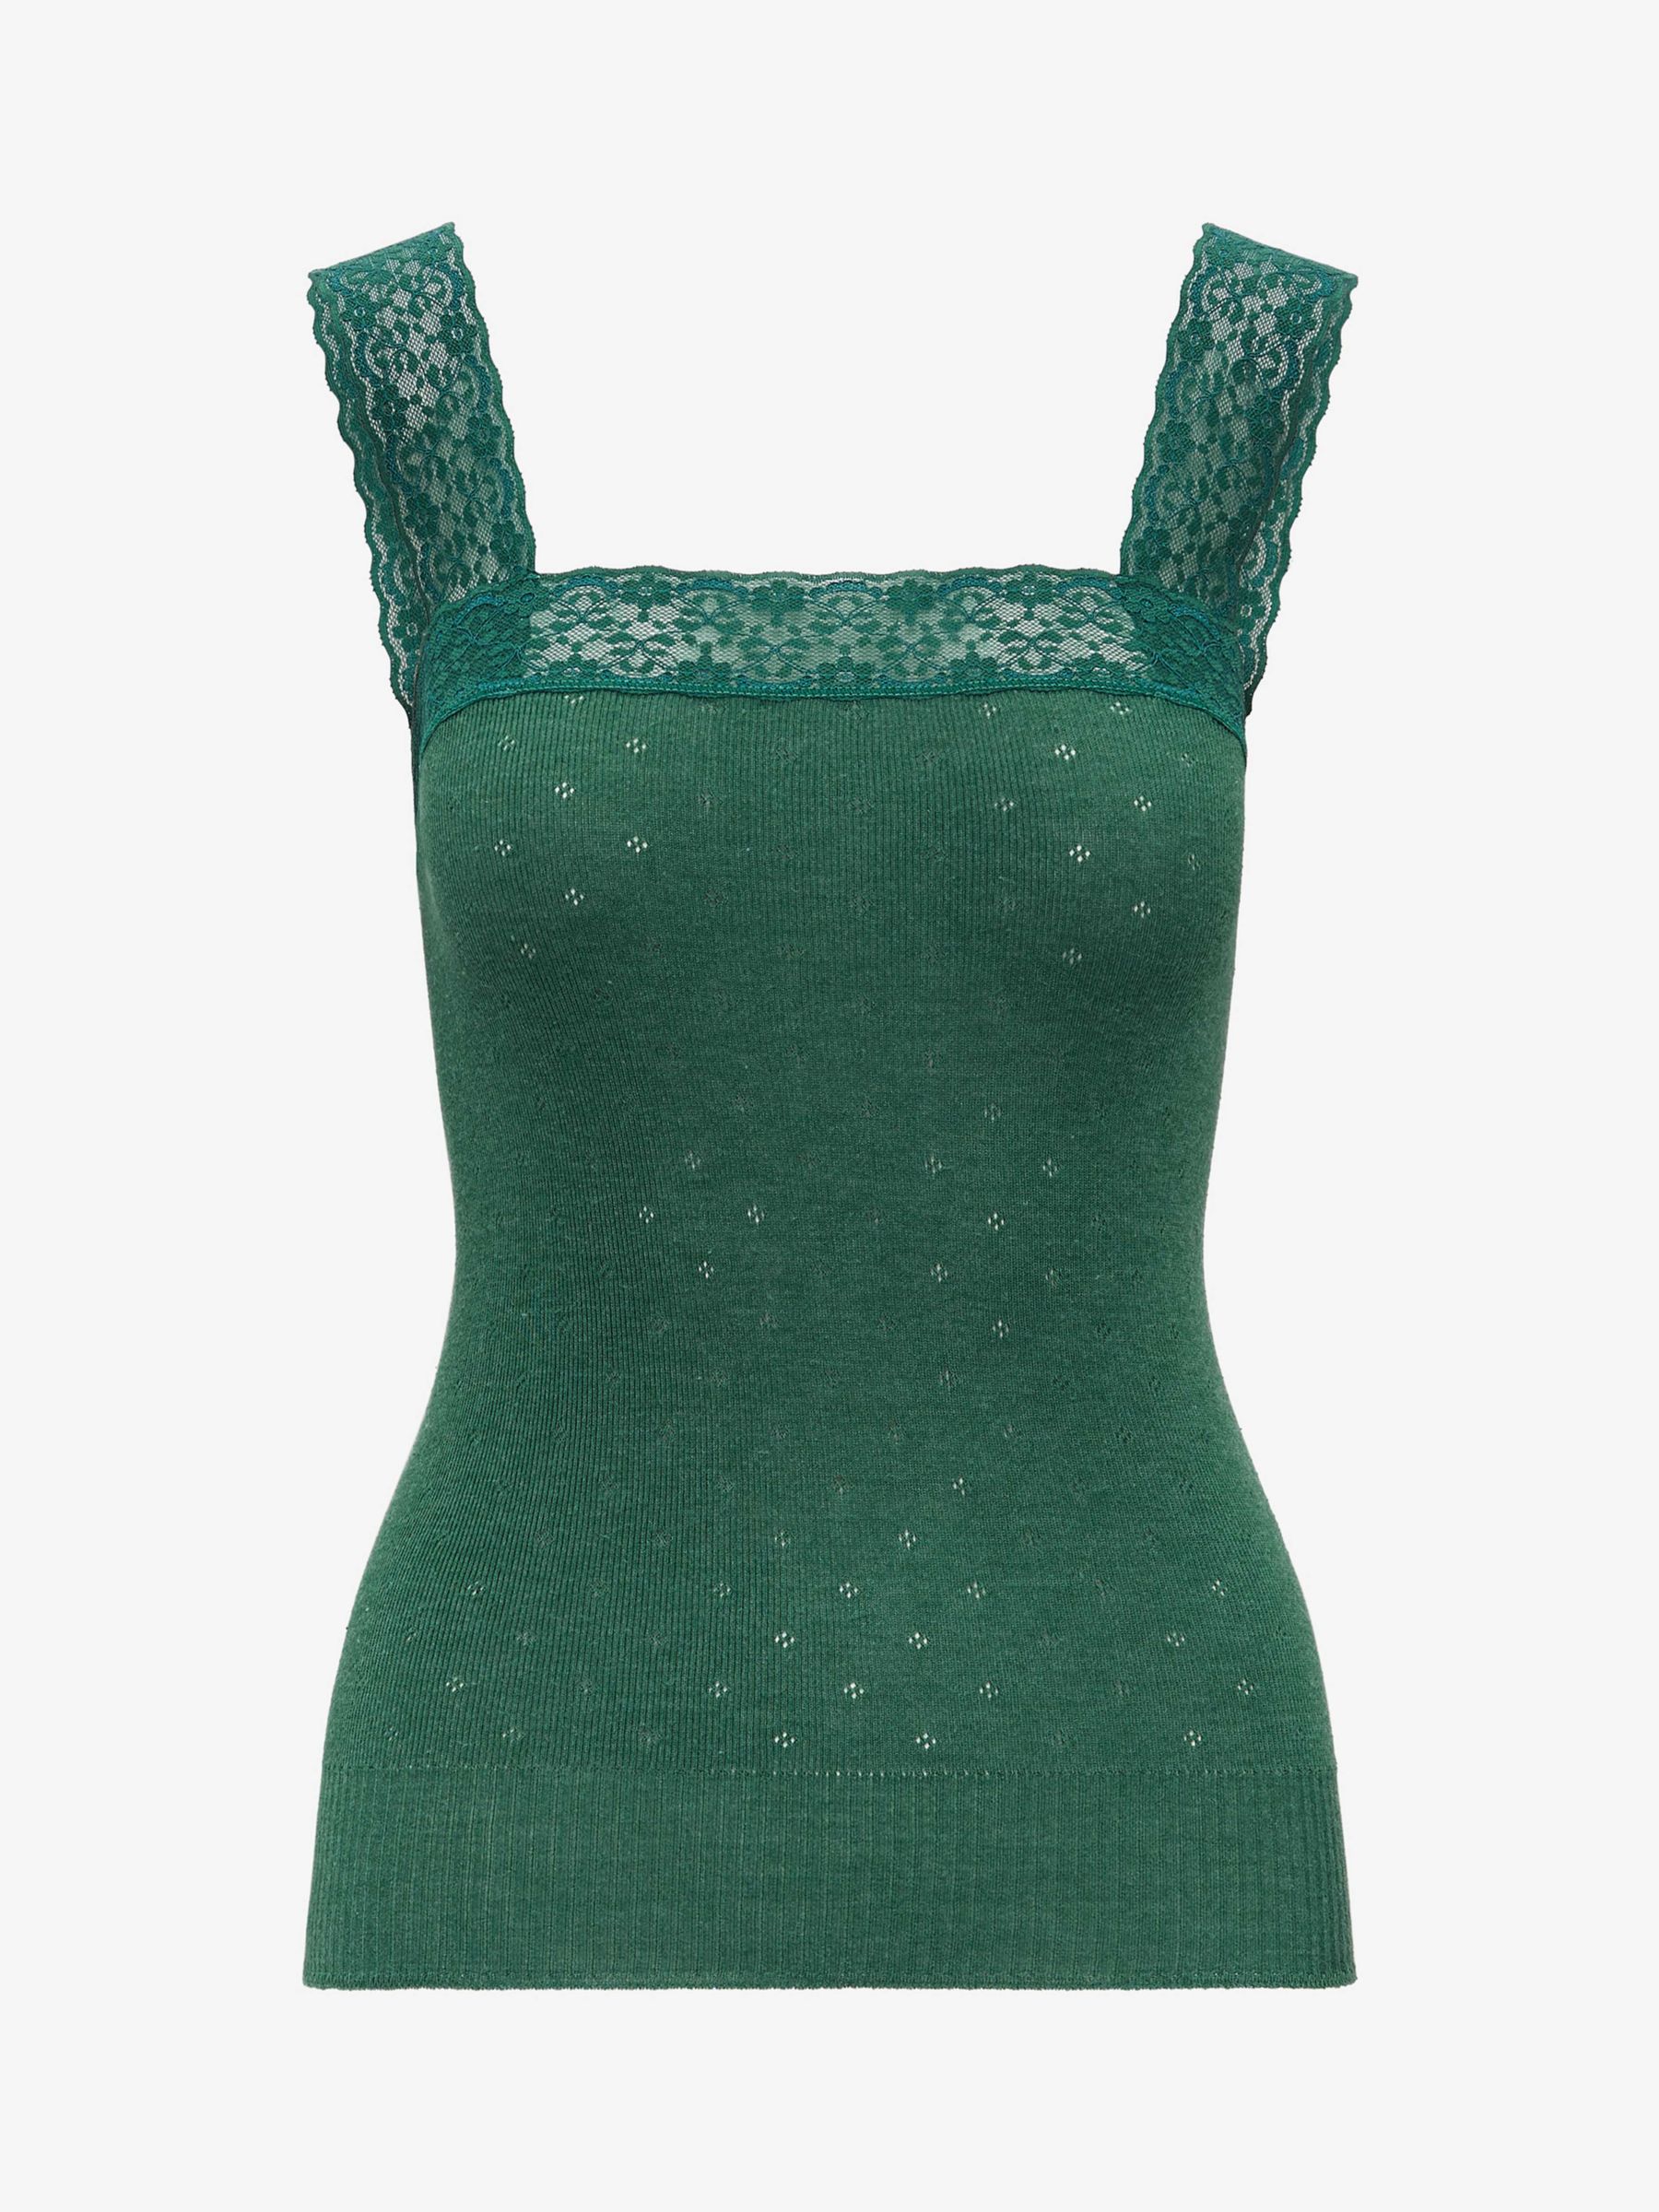 Brora Lace Trim Camisole Top, Emerald at John Lewis & Partners